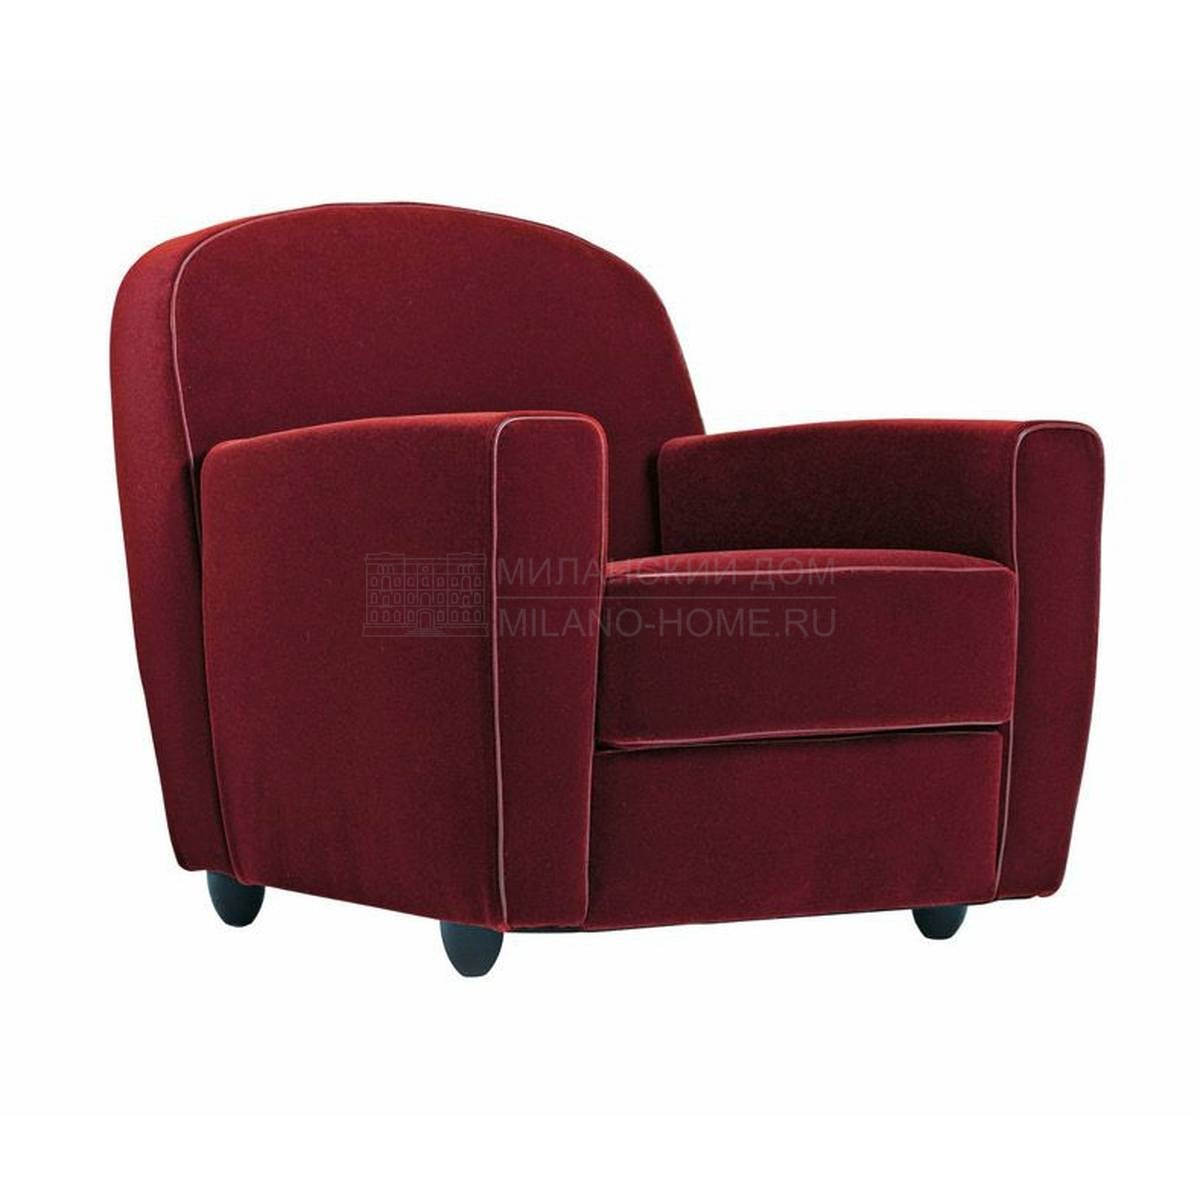 Кресло Vigilius armchair из Италии фабрики DRIADE